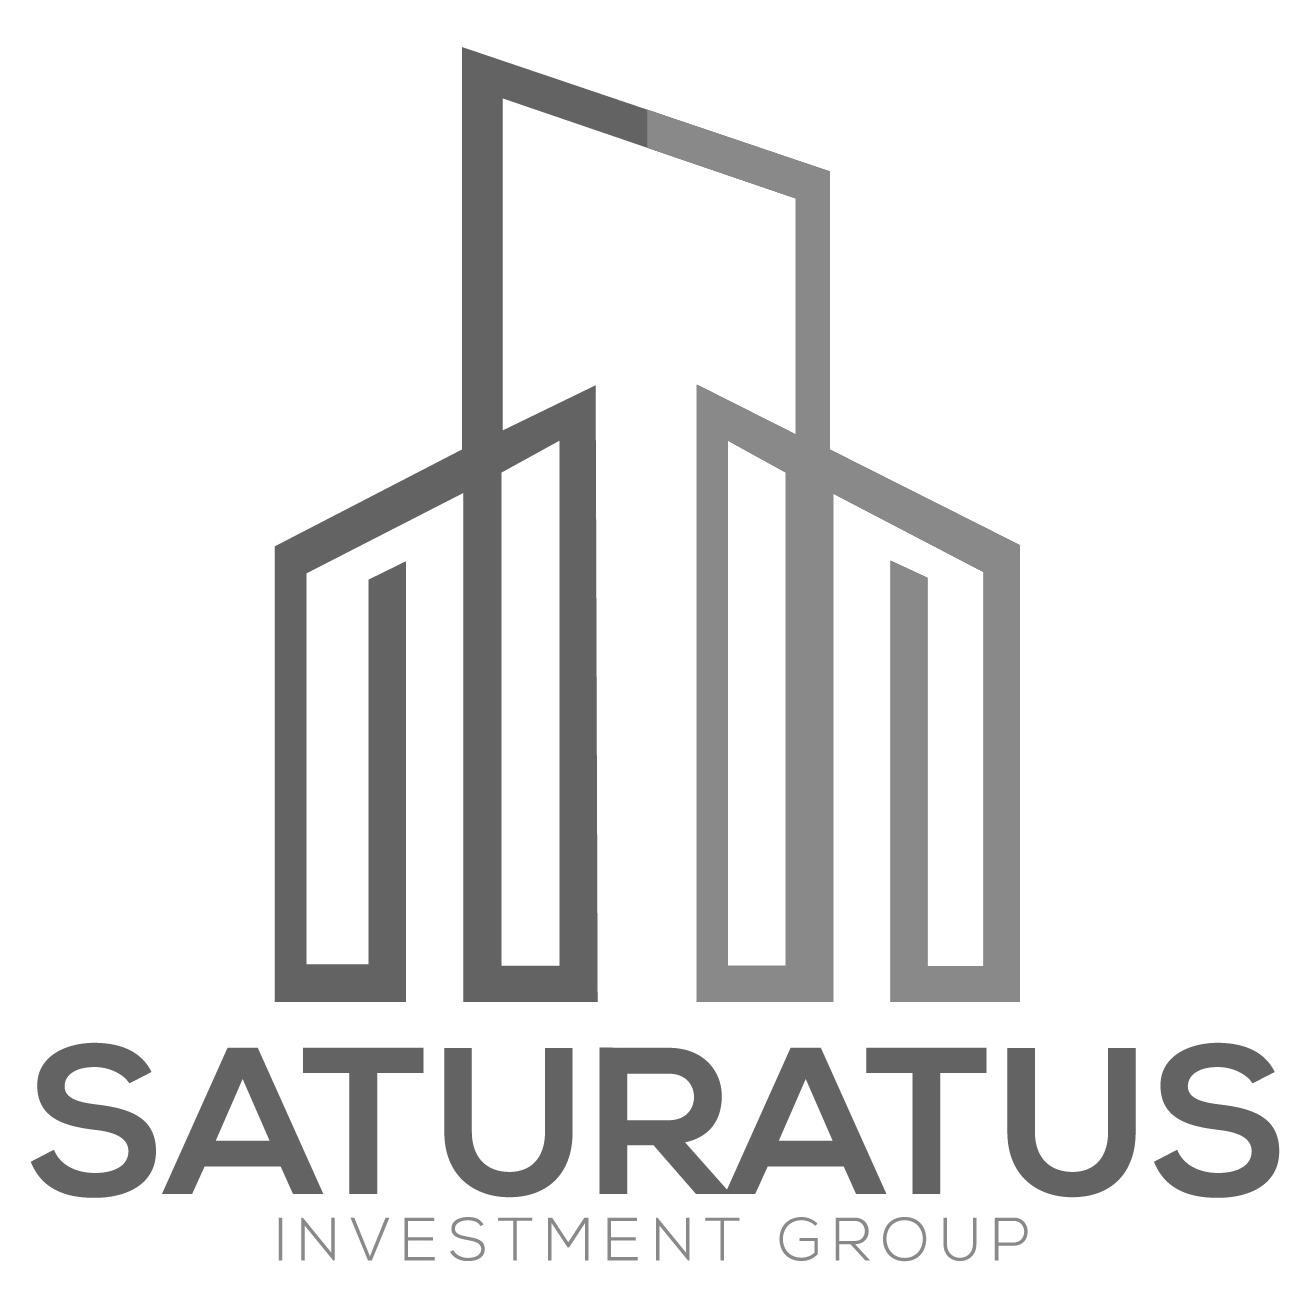 Saturatus Investment Group